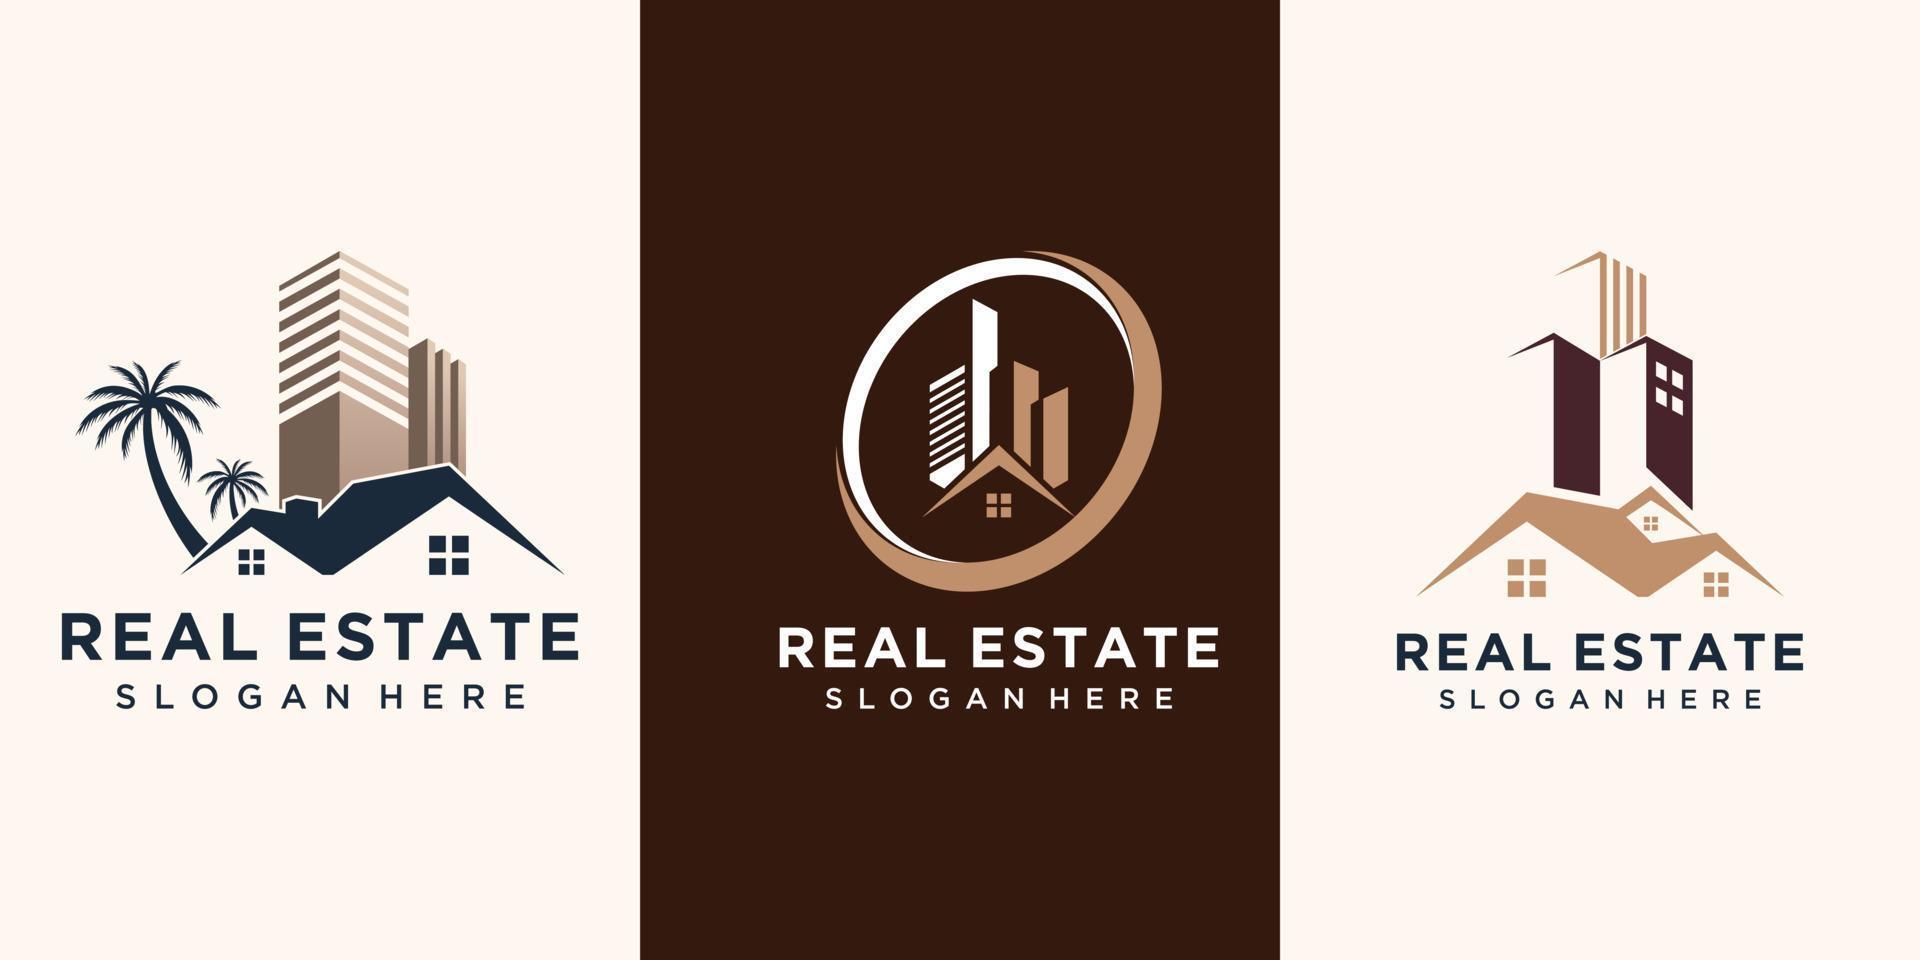 Real estate logo with creative design premium vector